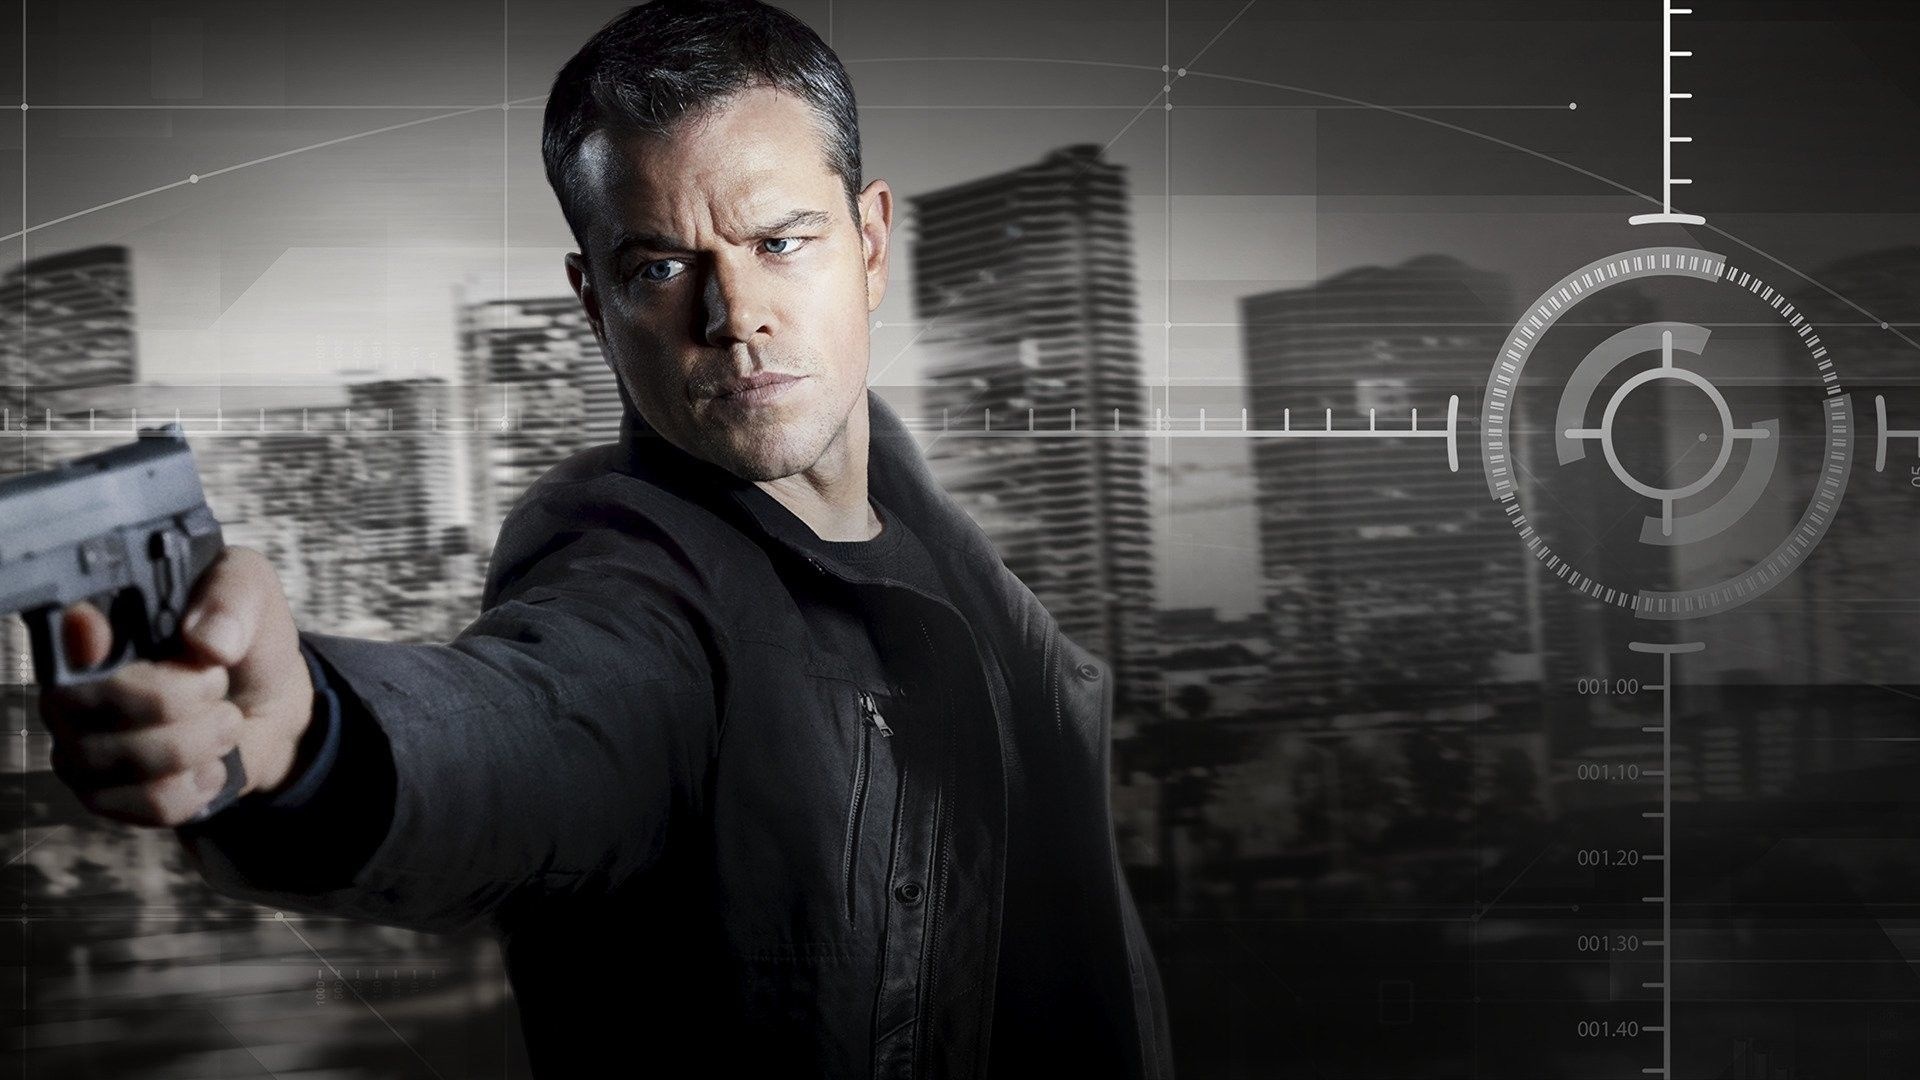 The Bourne: The film premiered in London on July 11, 2016, Matt Damon. 1920x1080 Full HD Wallpaper.